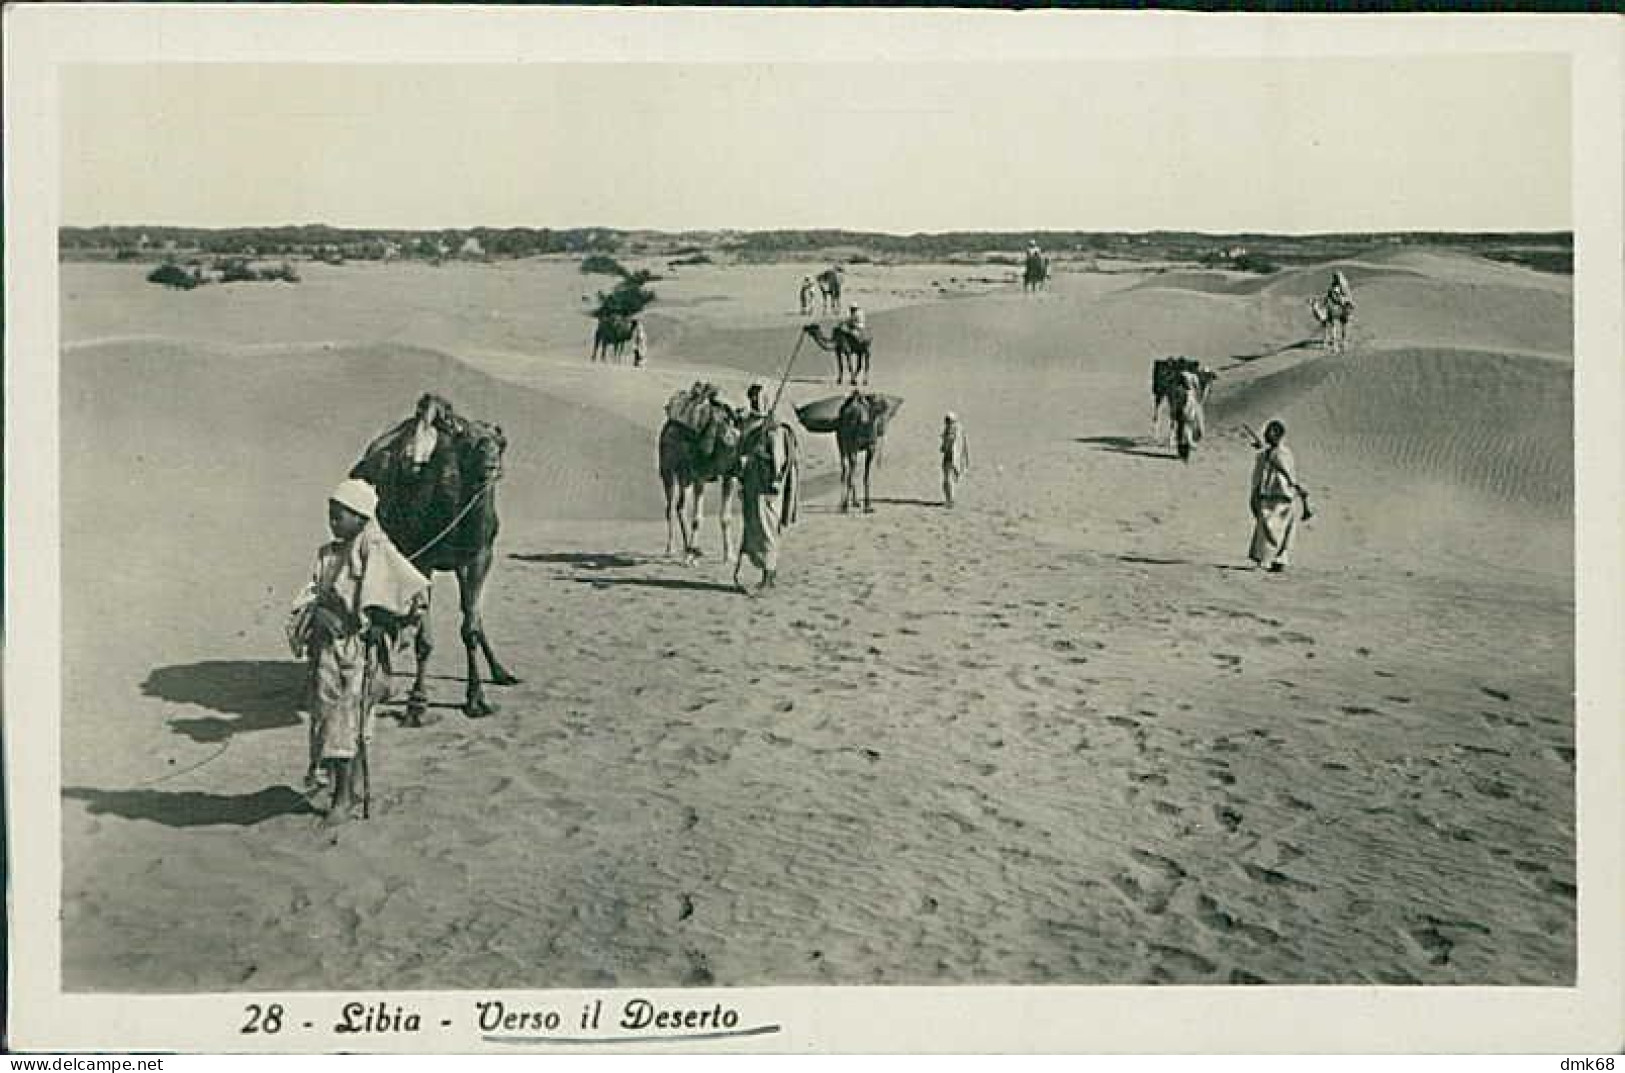 AFRICA - LIBYA / LIBIA - VERSO IL DESERTO / TOWARDS THE DESERT - EDIT AULA - RPPC POSTCARD 1930s (12588) - Libyen